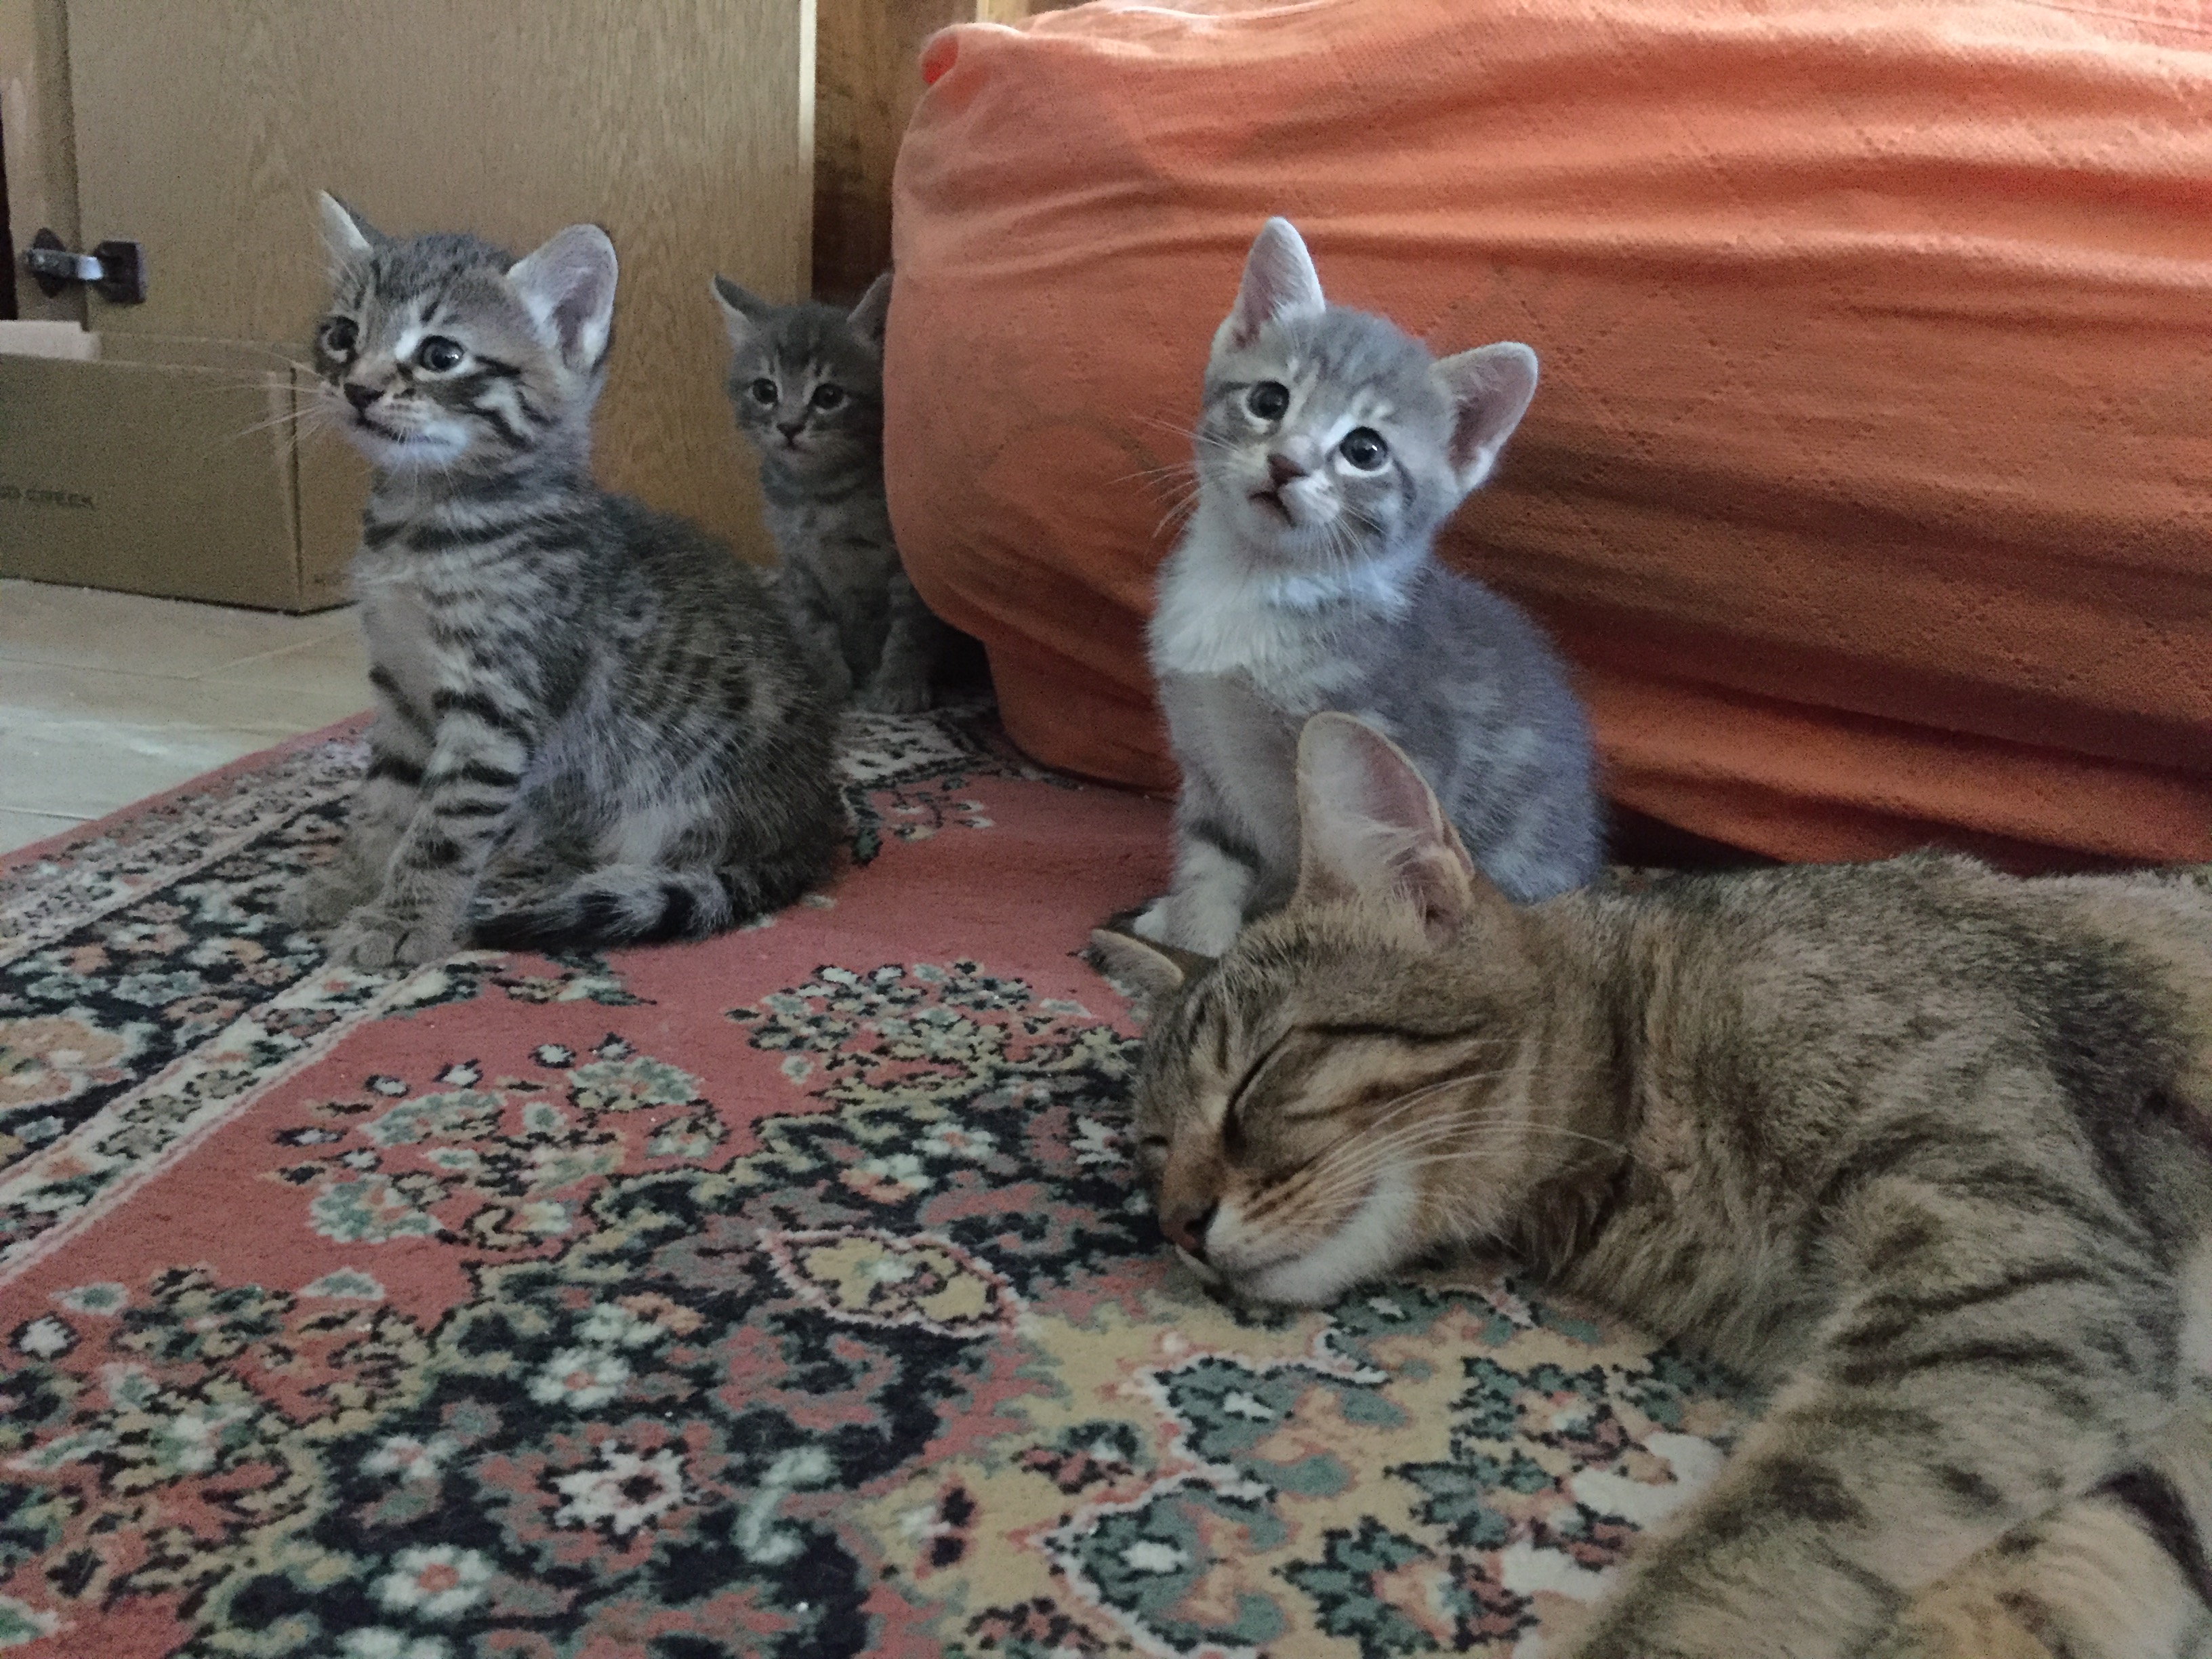 Pofuduk kardeşlere yuva olmak ister, Ücretsiz Kedi, Ankara